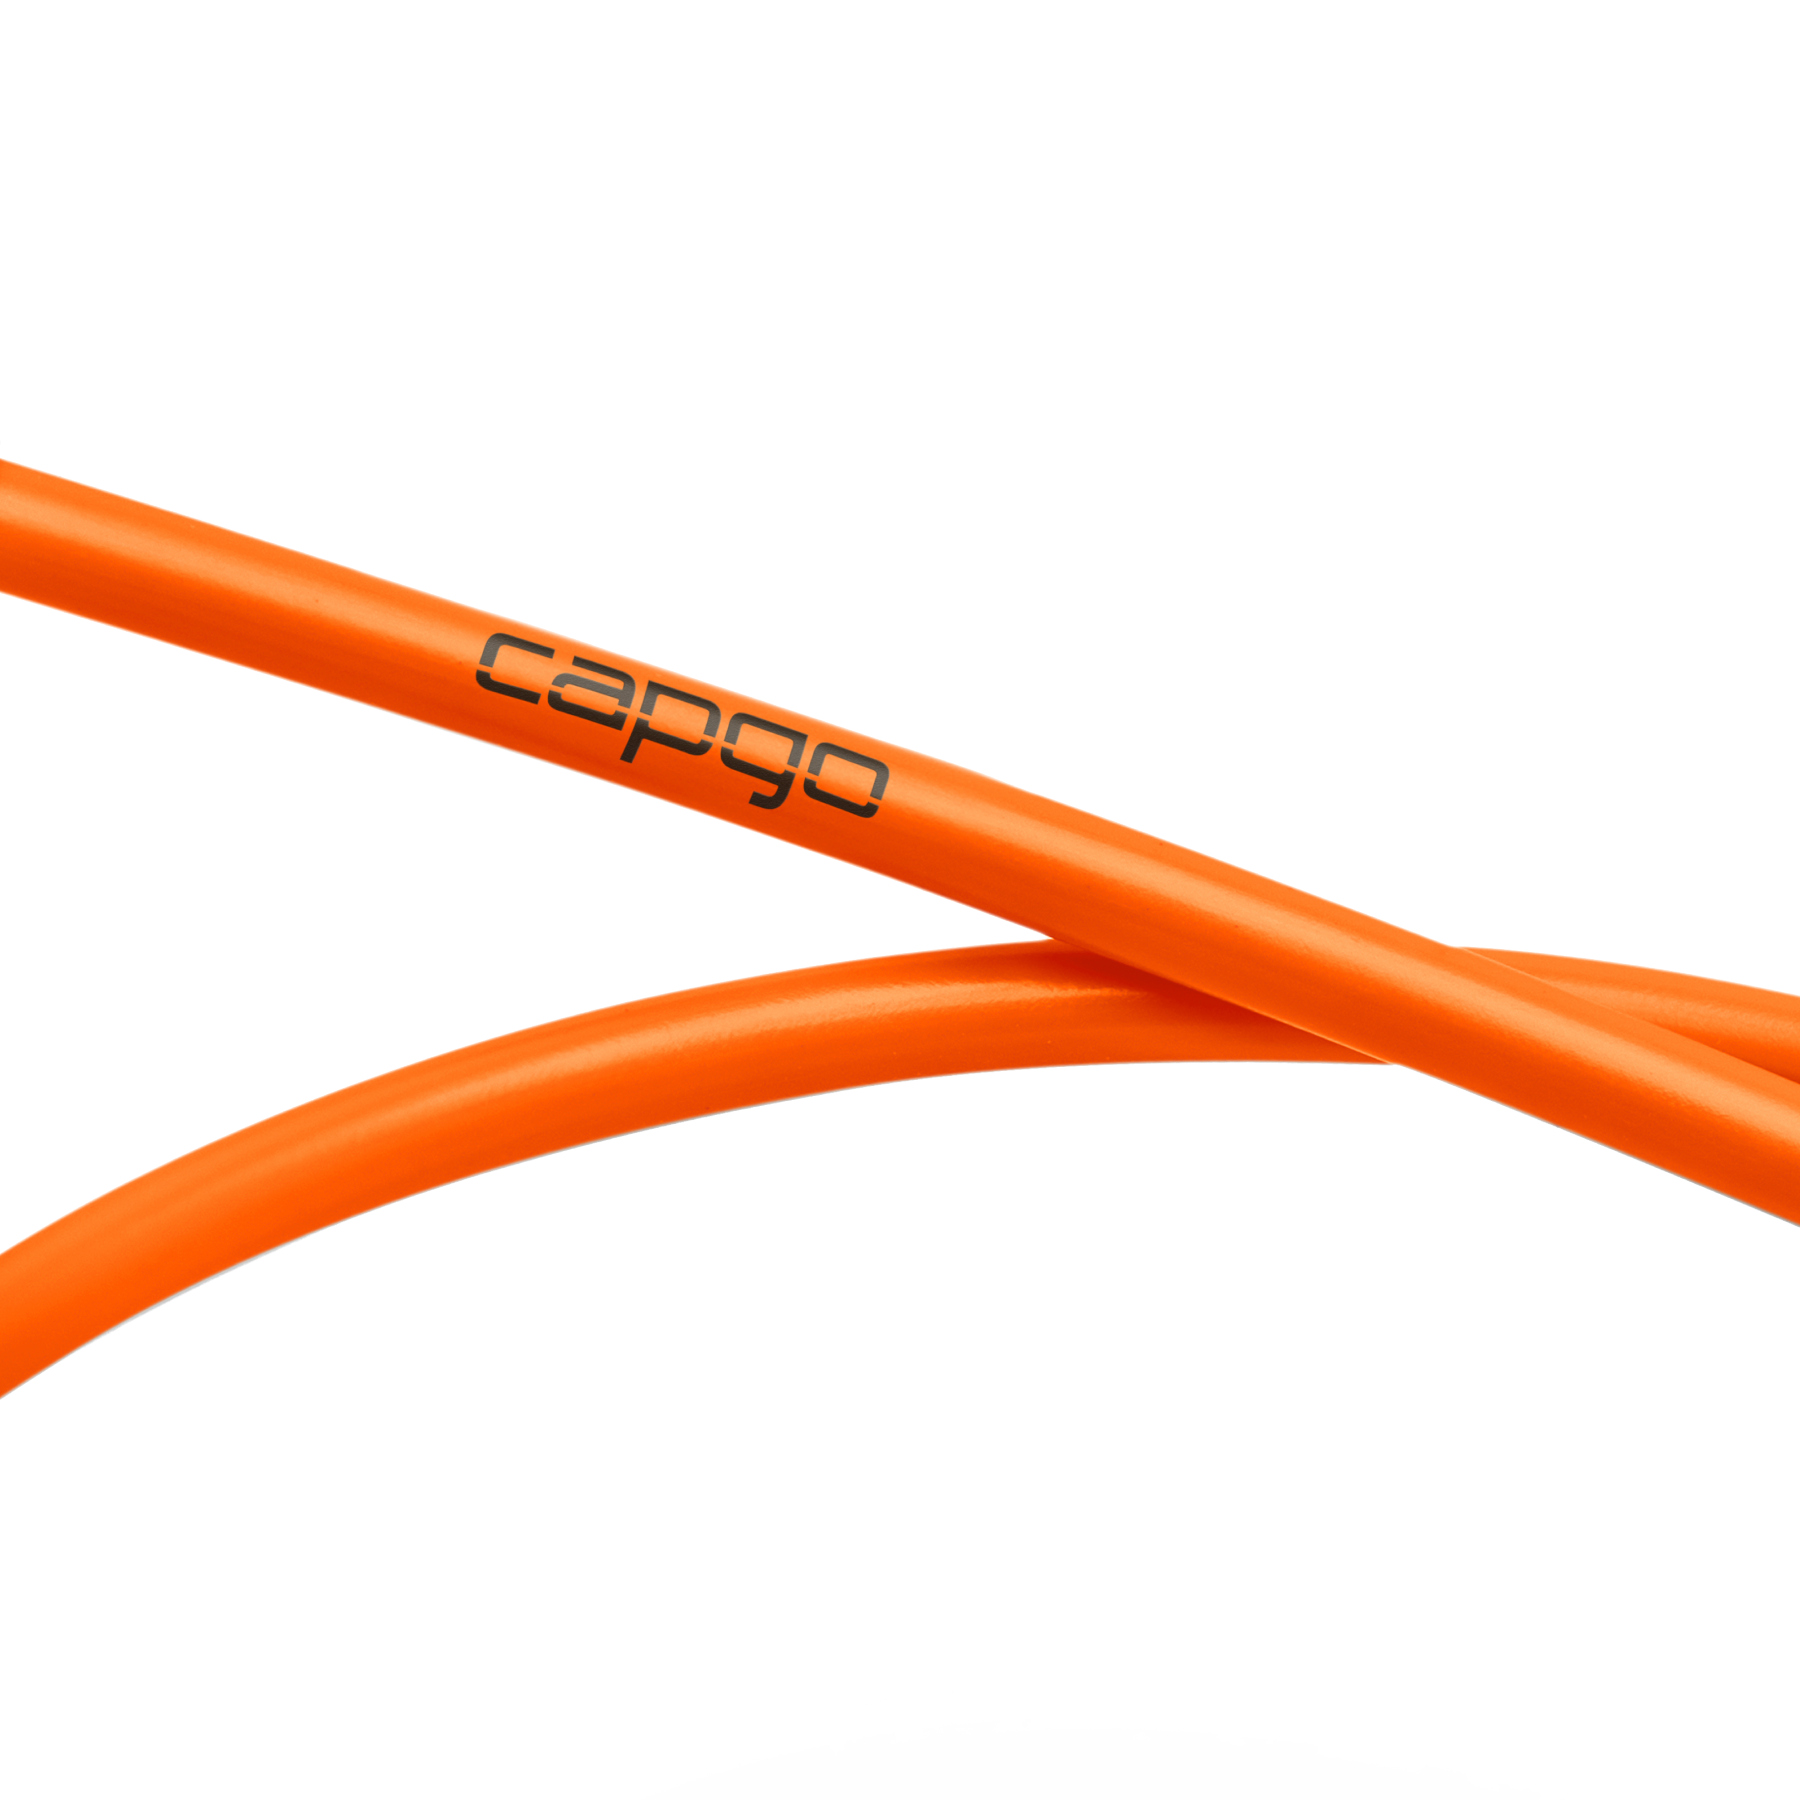 Productfoto van capgo Blue Line Shift Cable Housing - 4 mm - PTFE - 3000 mm - neon orange